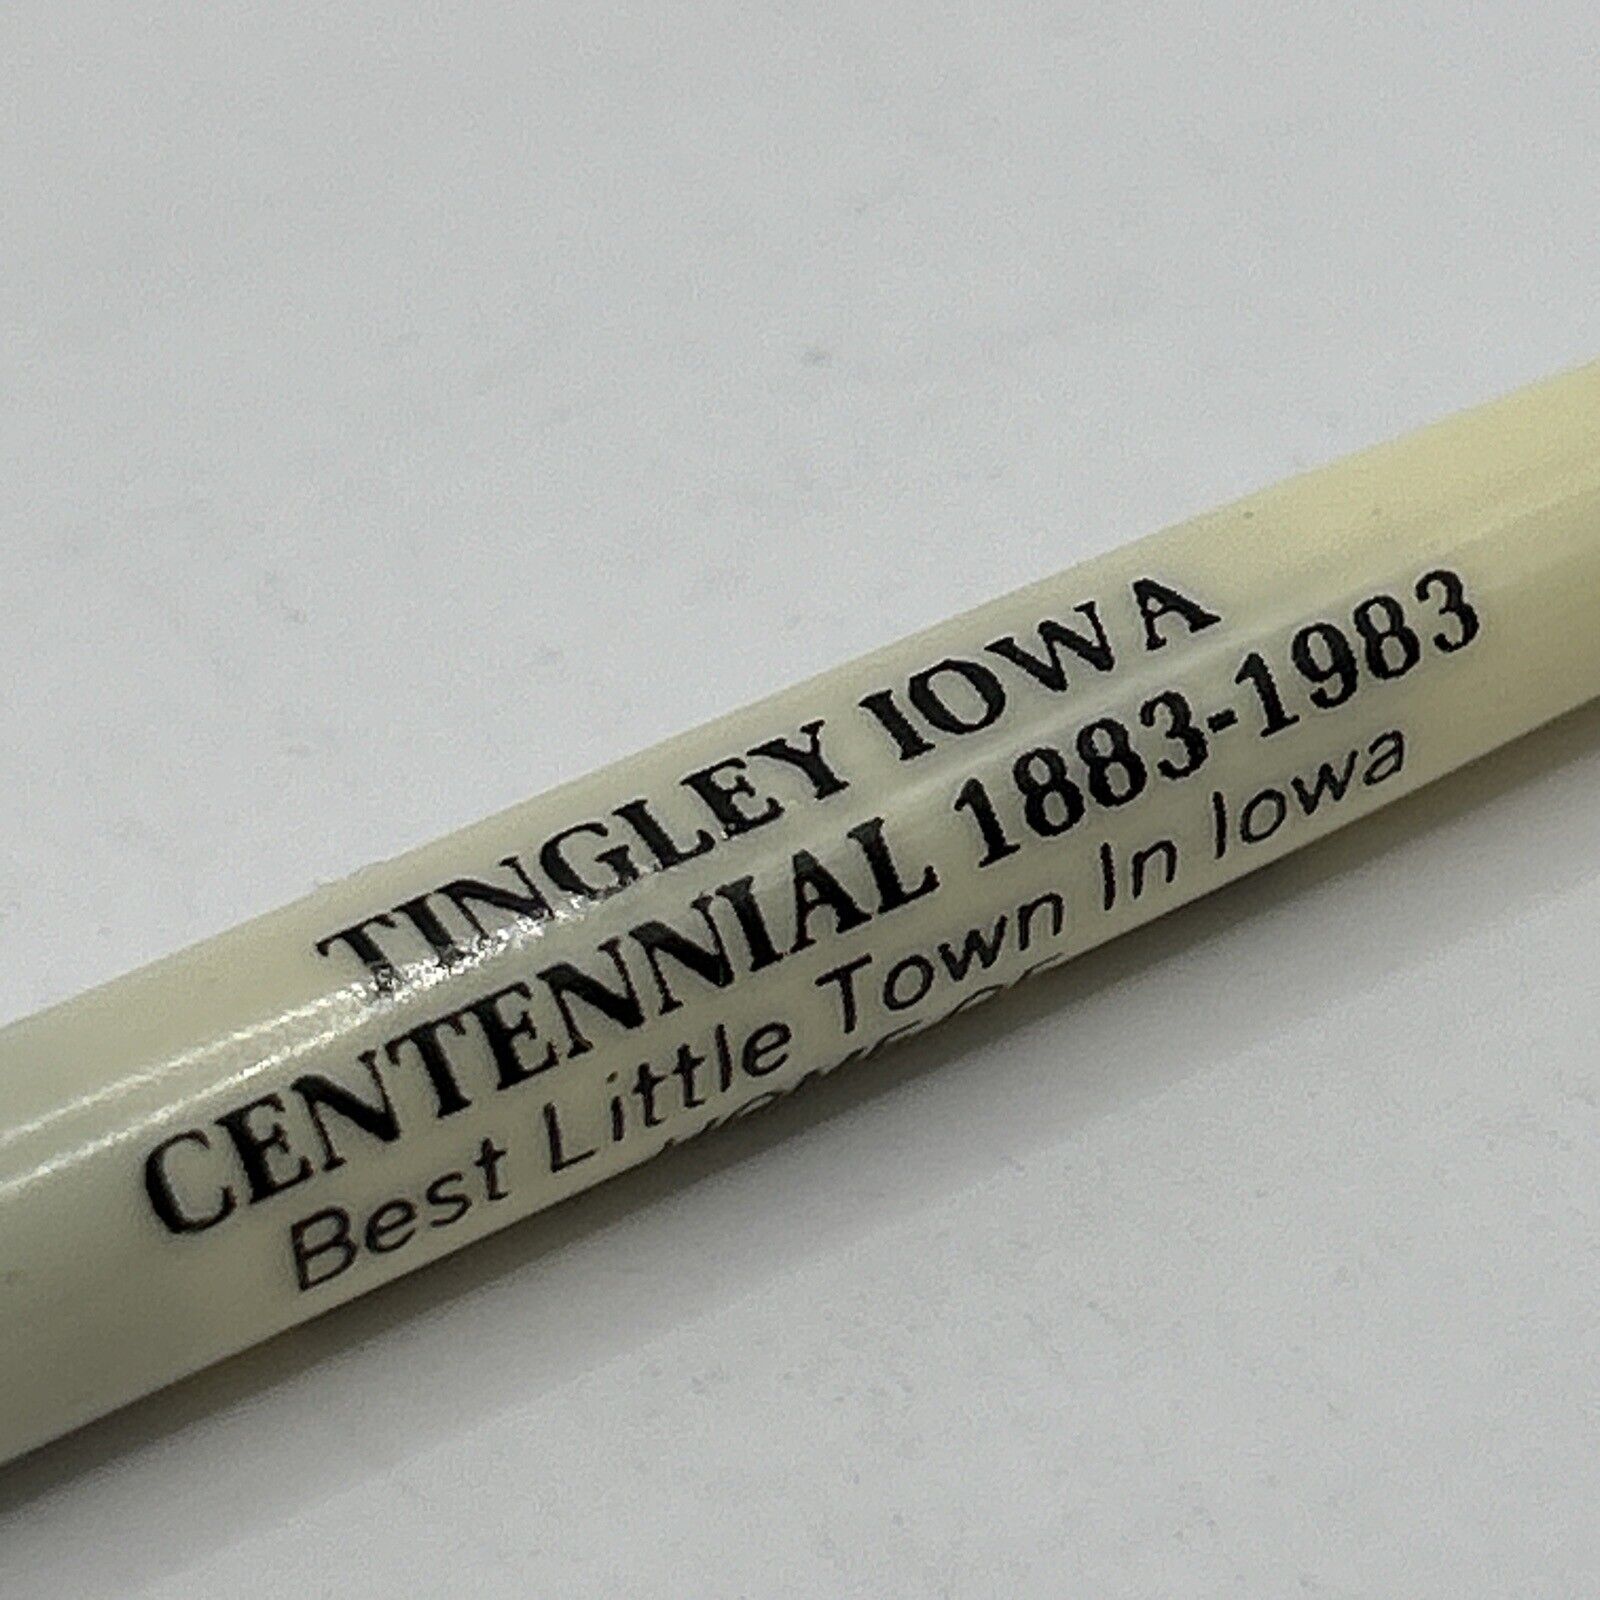 VTG Ballpoint Pen Tingley Iowa Centennial 1983